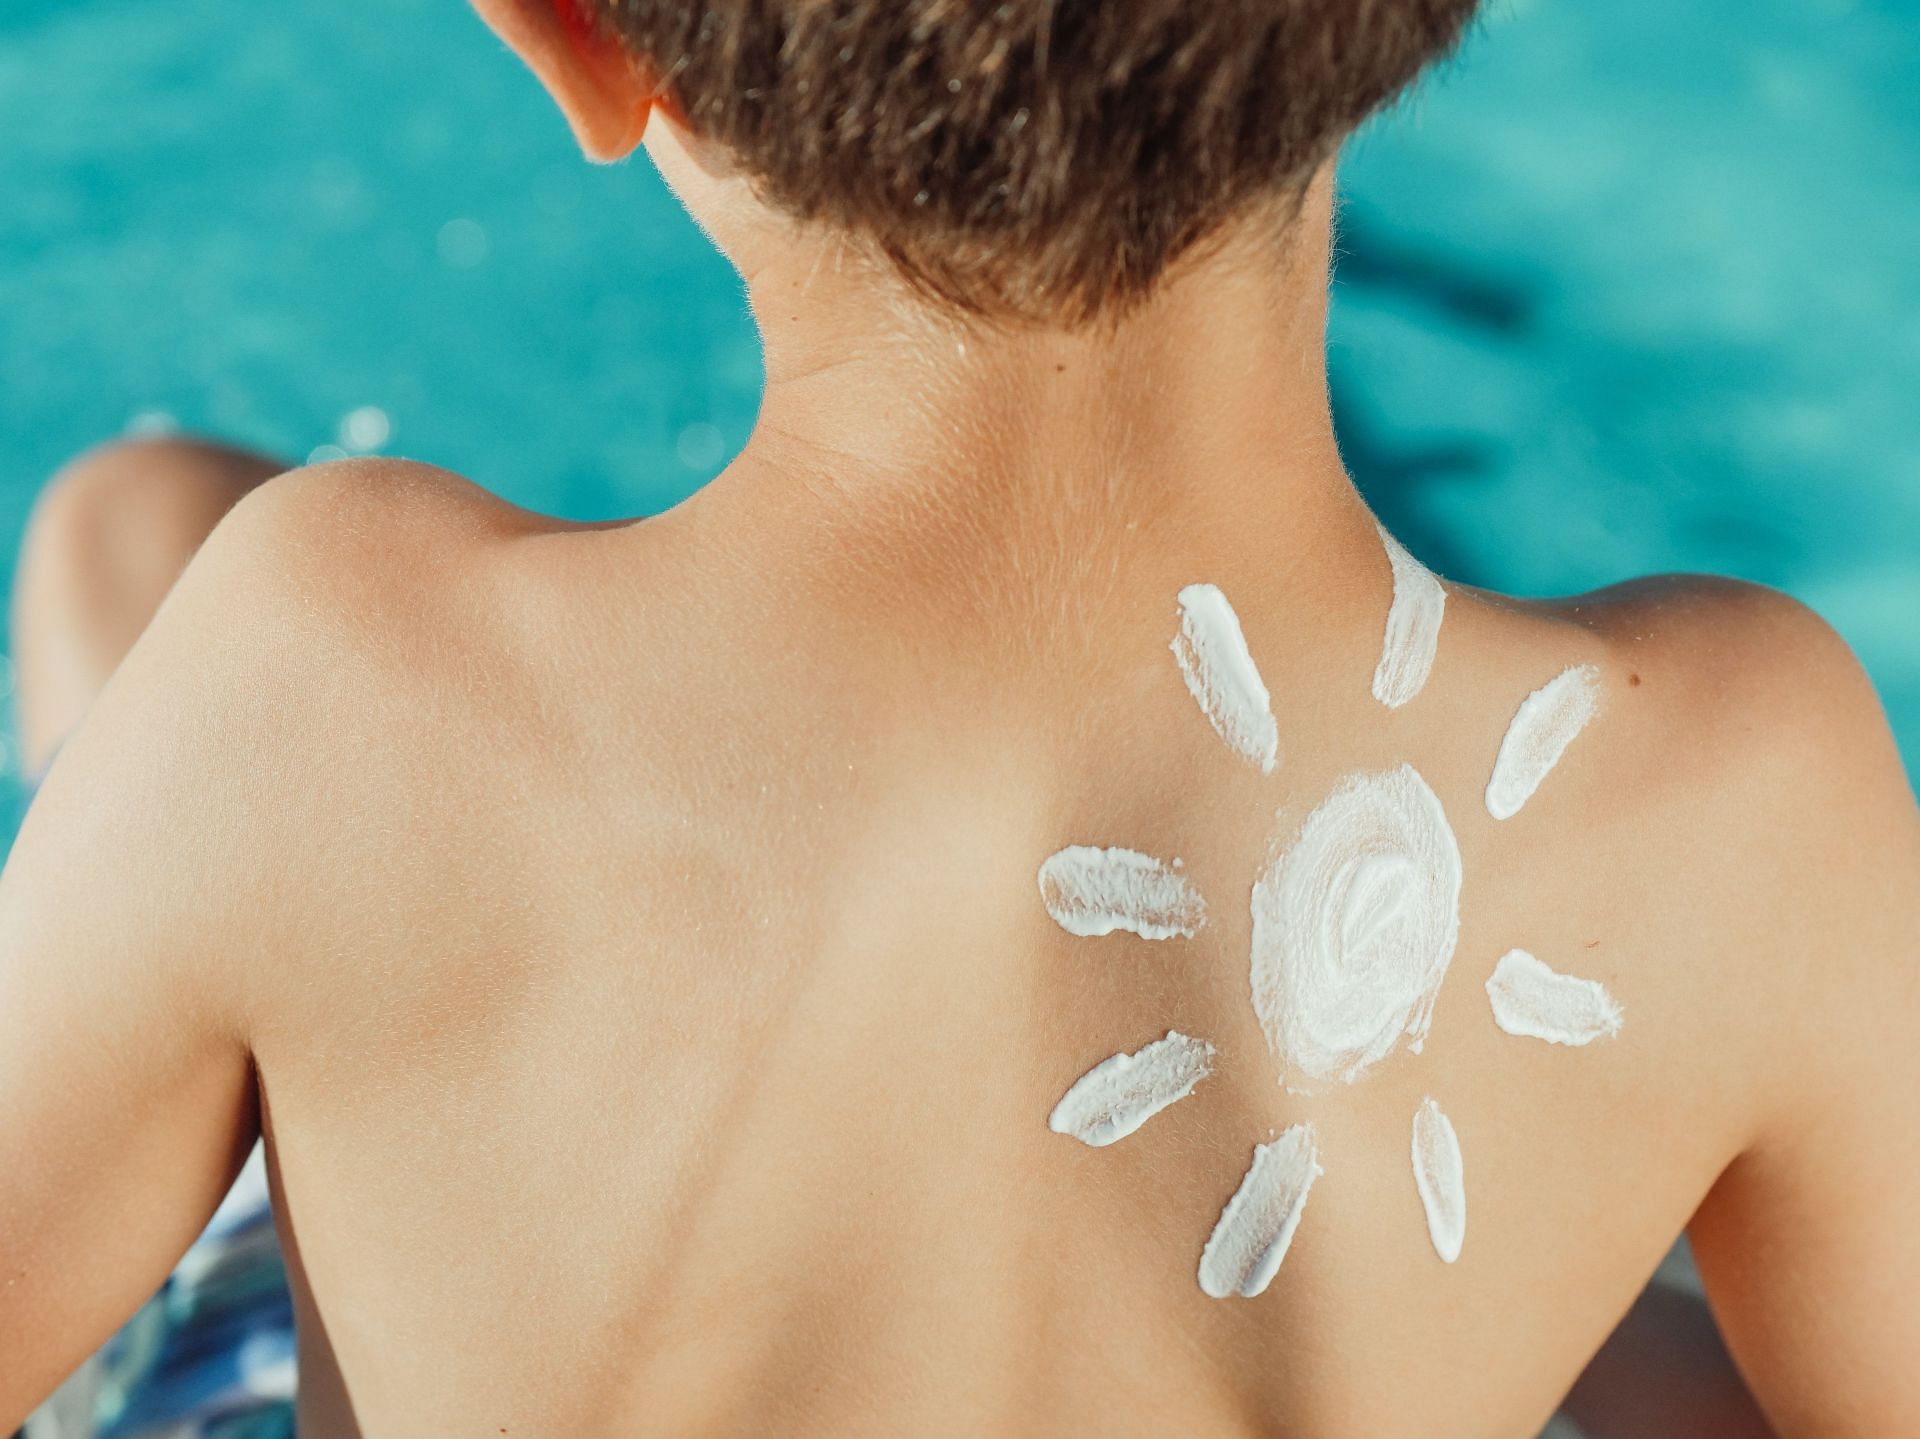 Importance of sunscreen (Image sourced via Pexels/Pindel Media)